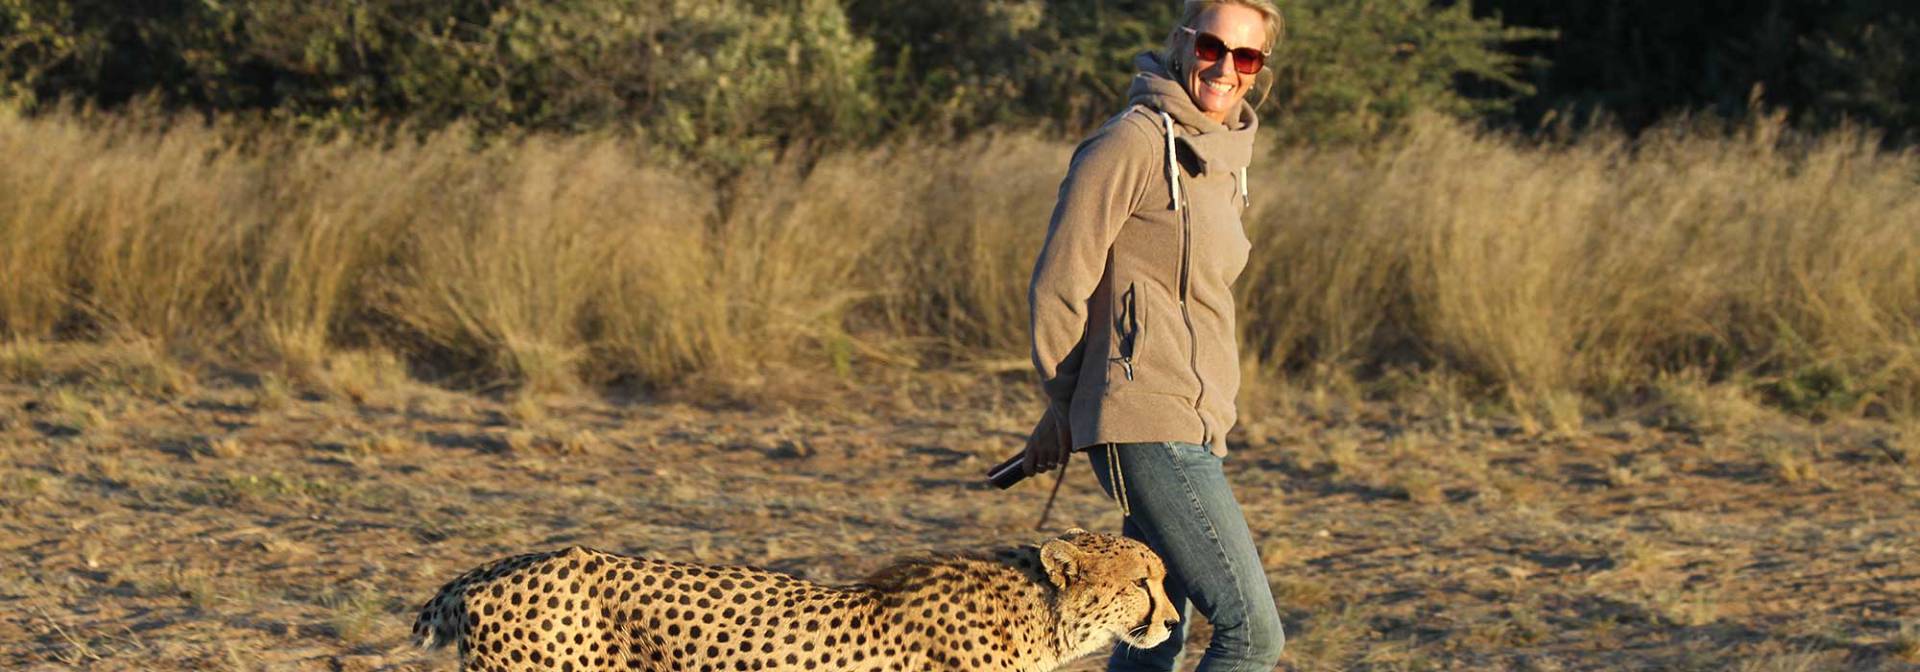 Gepardenprojekt in Namibia